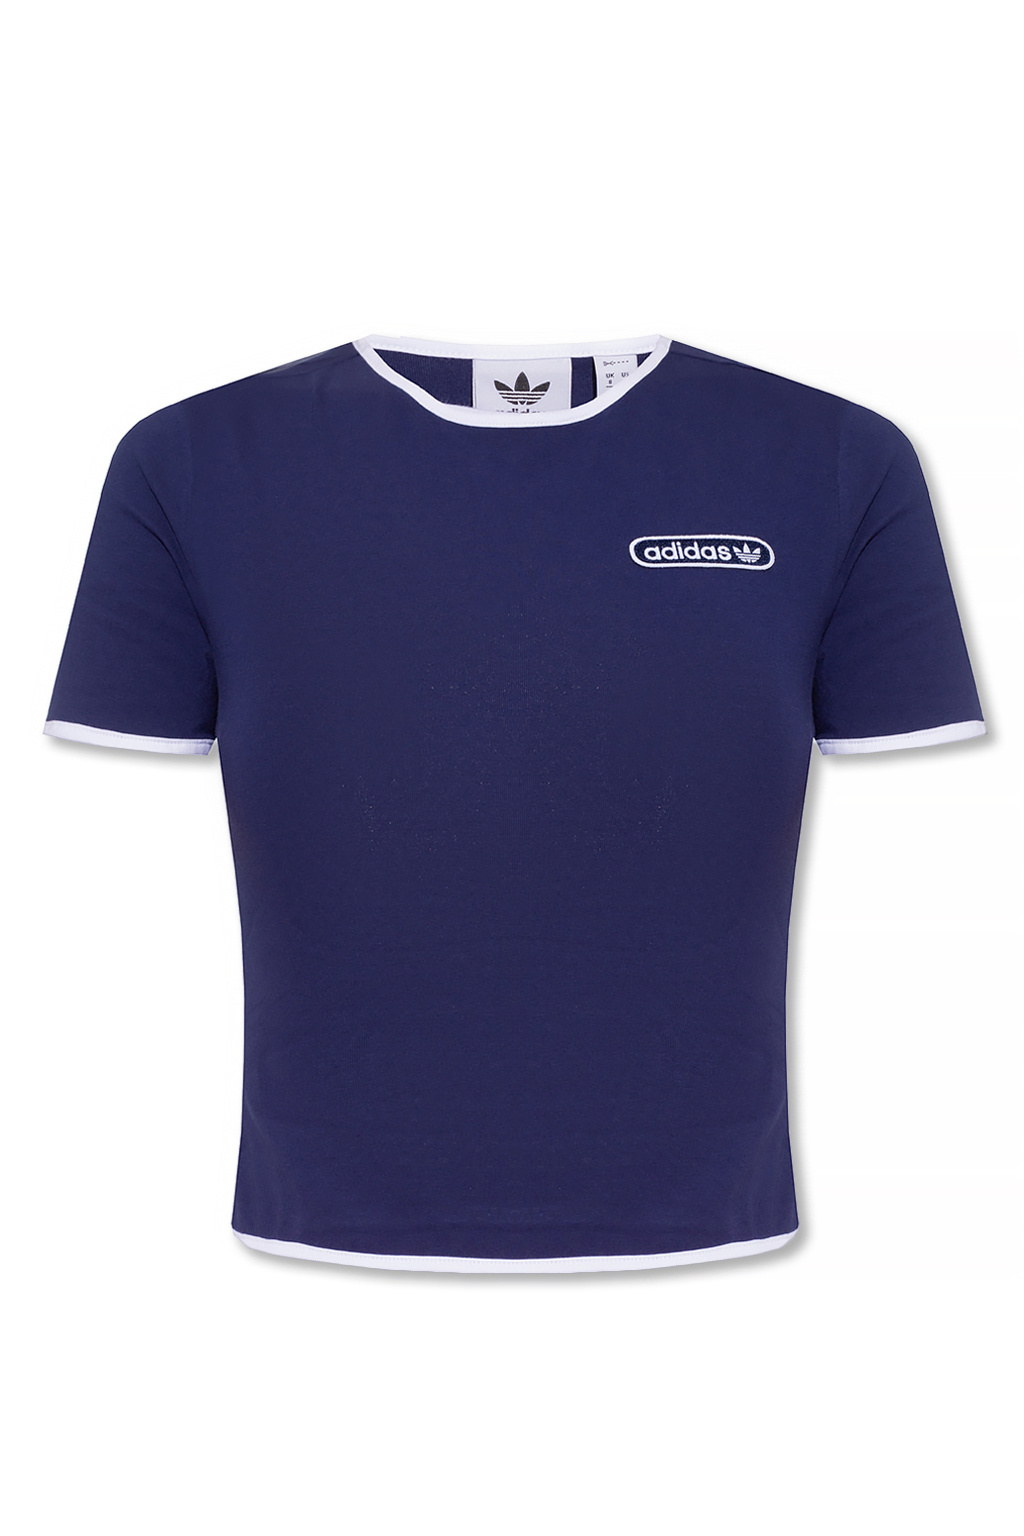 Navy blue Logo T - Junior Filles Australia Entraînement ADIDAS Stripe - shirt 3 - IetpShops Originals Tights adidas